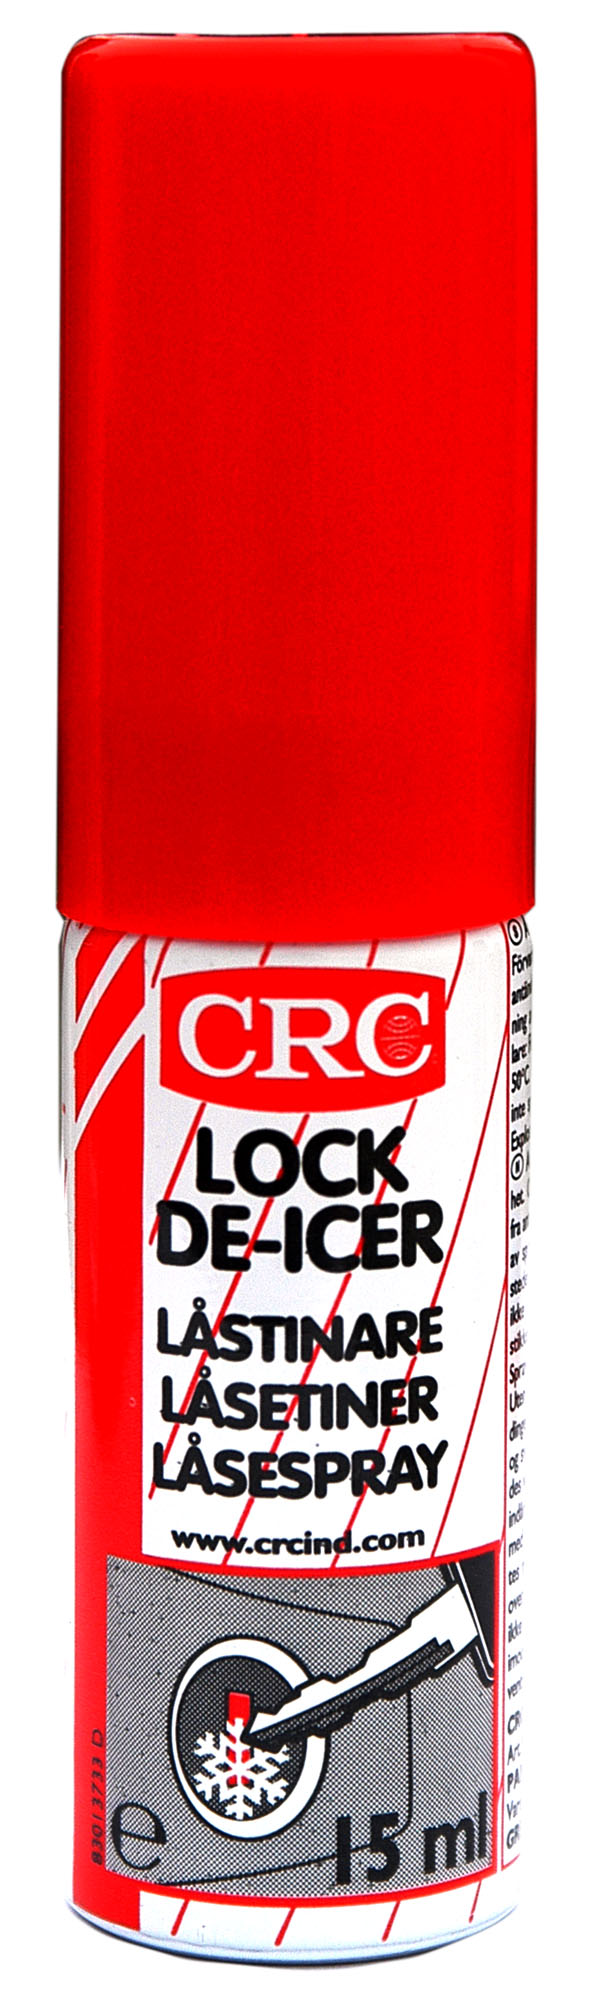 Låsspray Lock De-Icer 15 ml